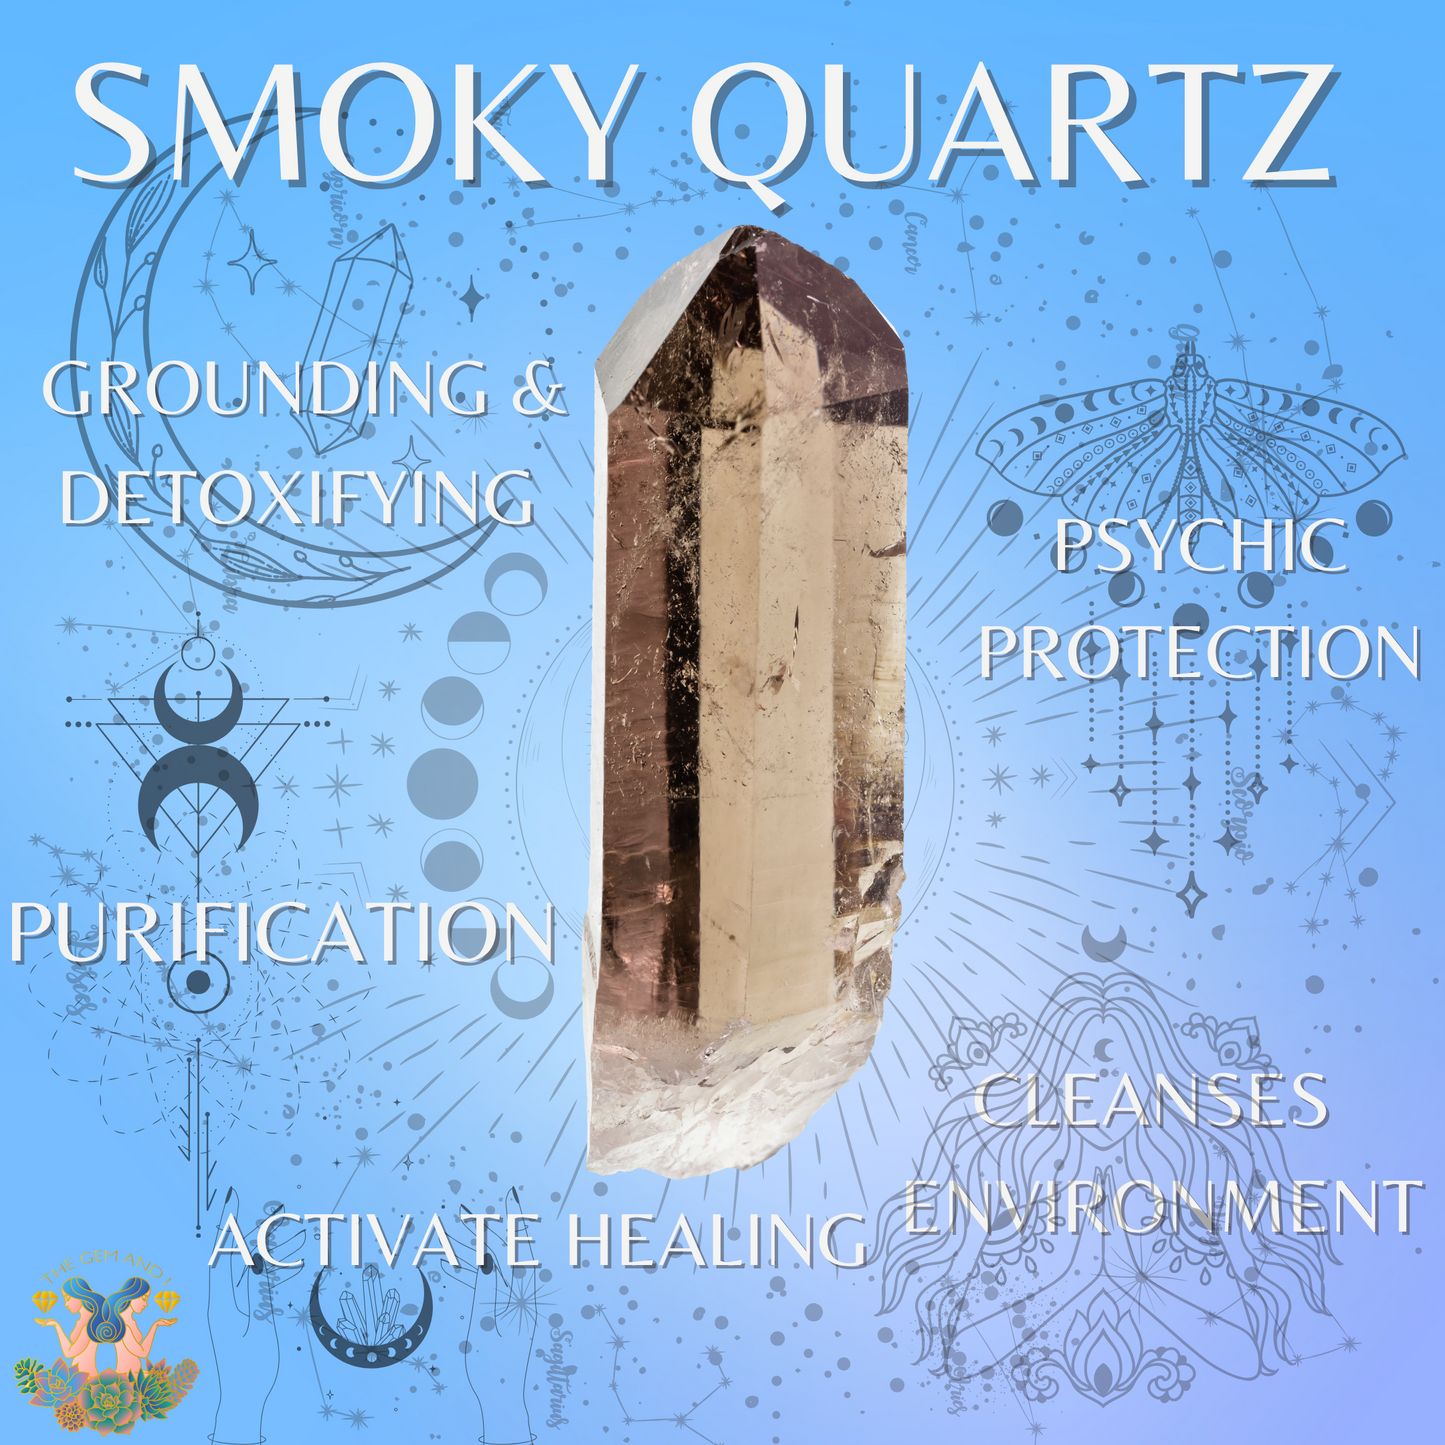 Properties of Smoky Quartz